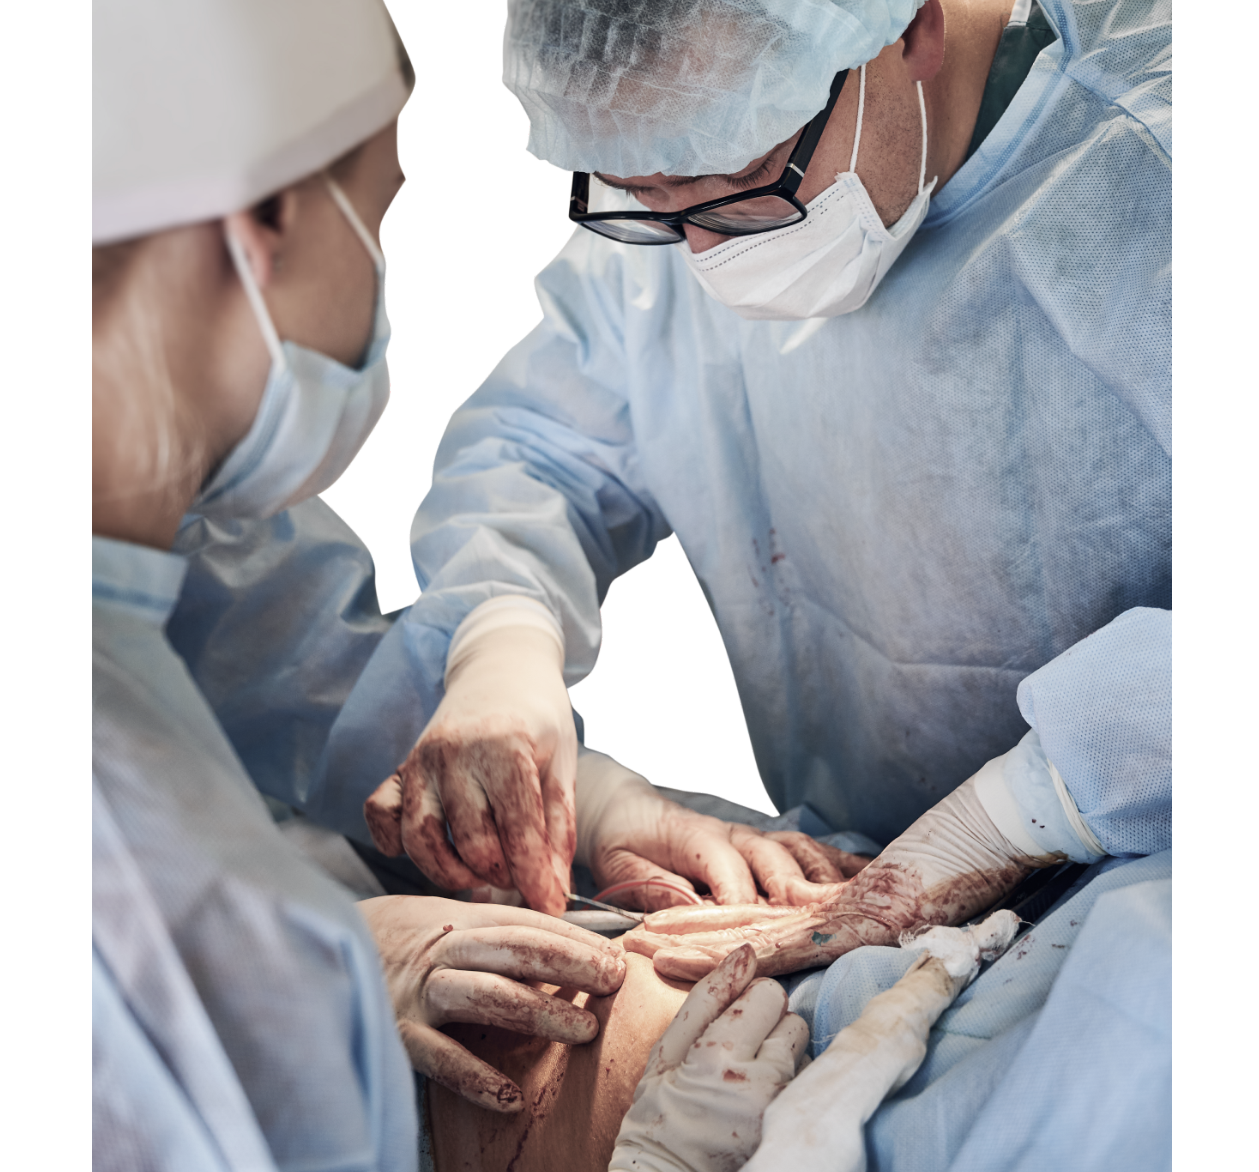 Procedure of Liver Transplant Surgery